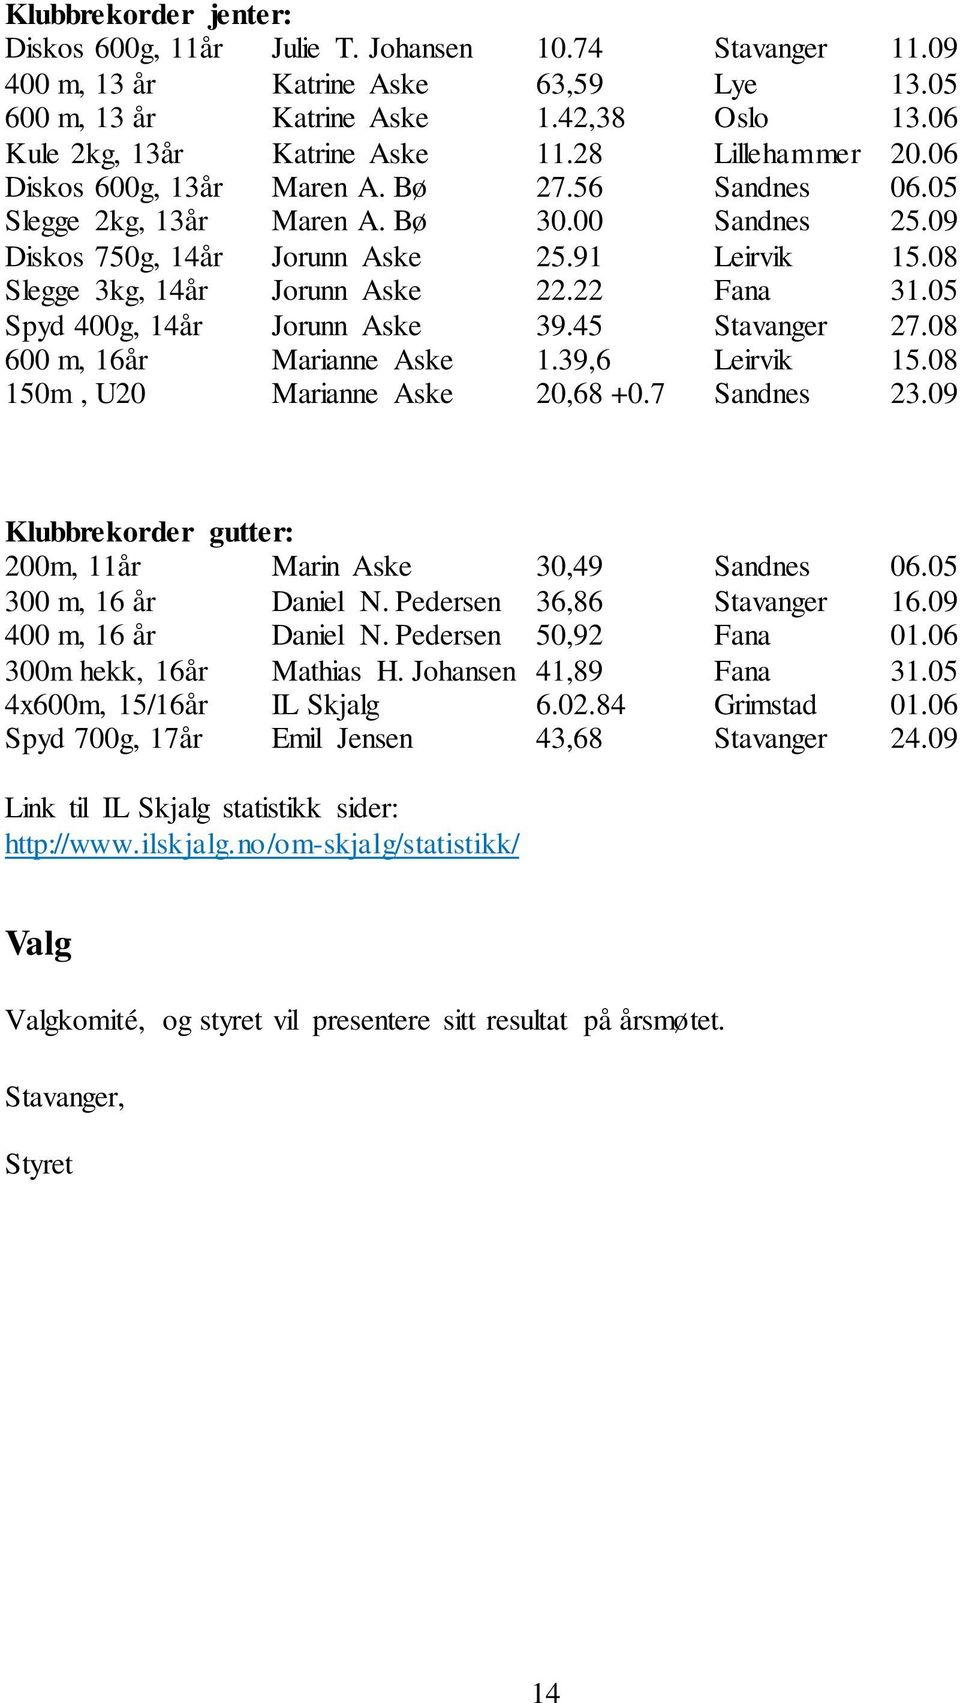 08 Slegge 3kg, 14år Jorunn Aske 22.22 Fana 31.05 Spyd 400g, 14år Jorunn Aske 39.45 Stavanger 27.08 600 m, 16år Marianne Aske 1.39,6 Leirvik 15.08 150m, U20 Marianne Aske 20,68 +0.7 Sandnes 23.